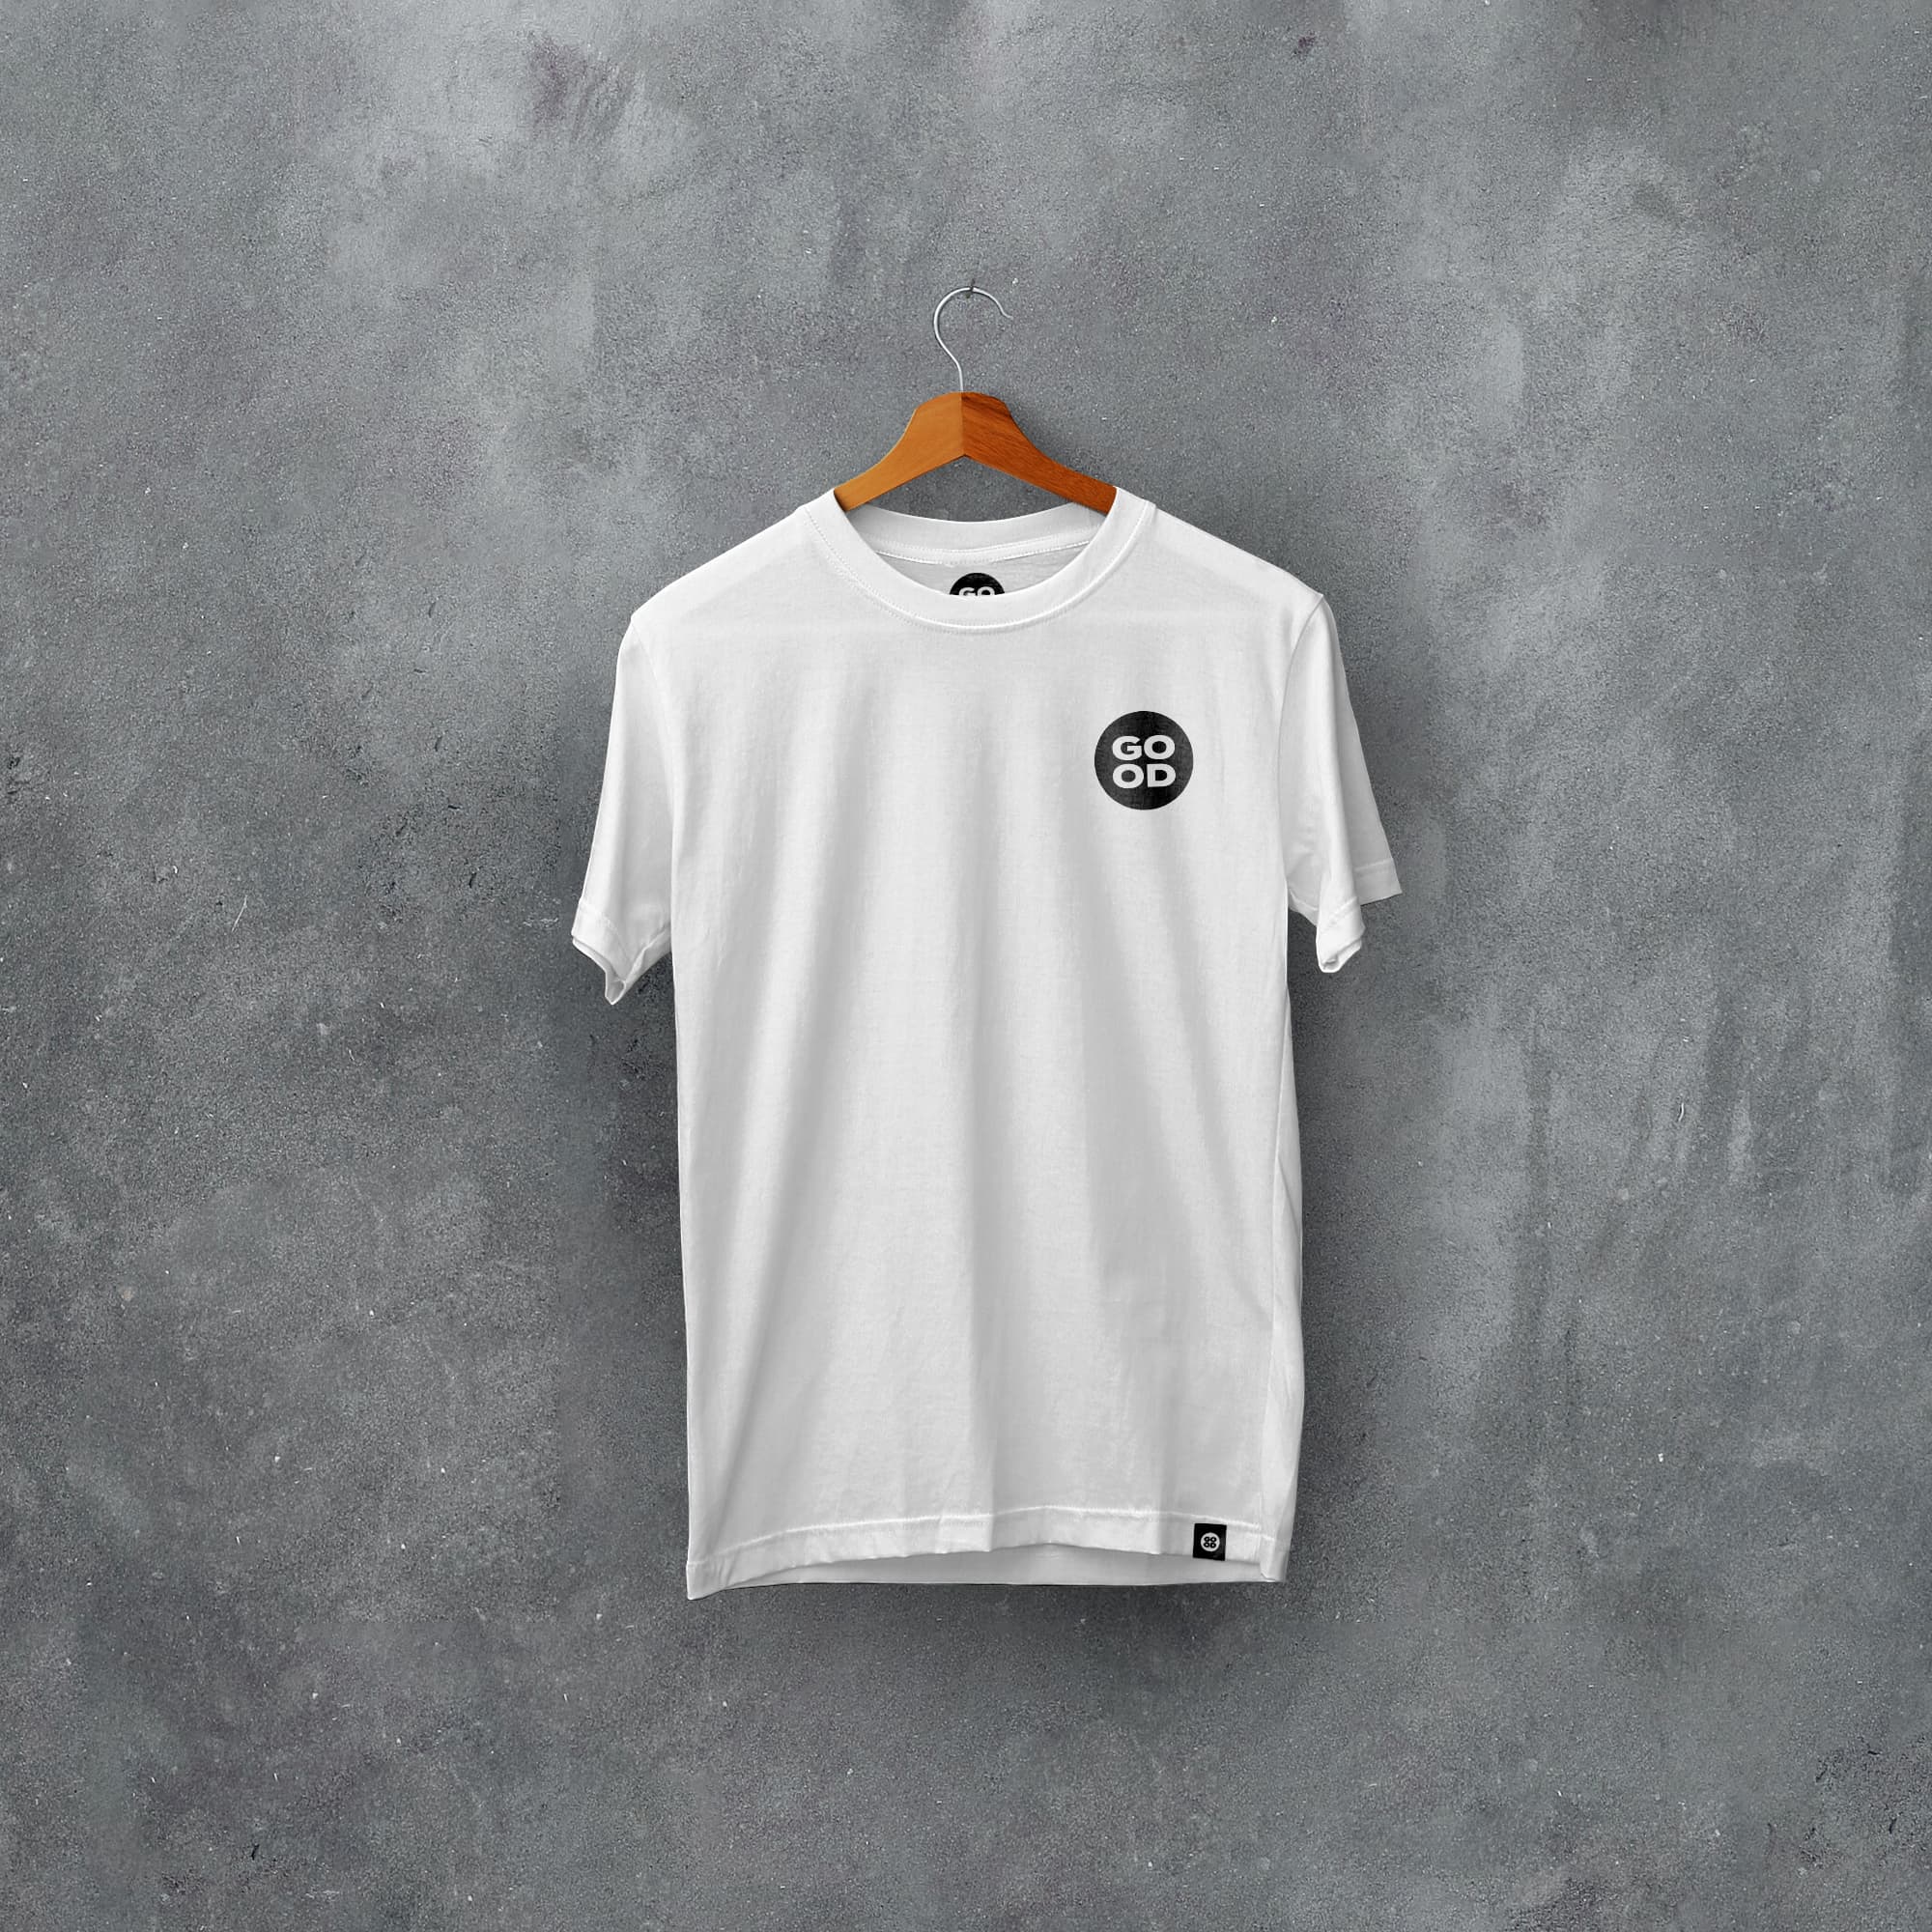 Bolton Classic Kits Football T-Shirt